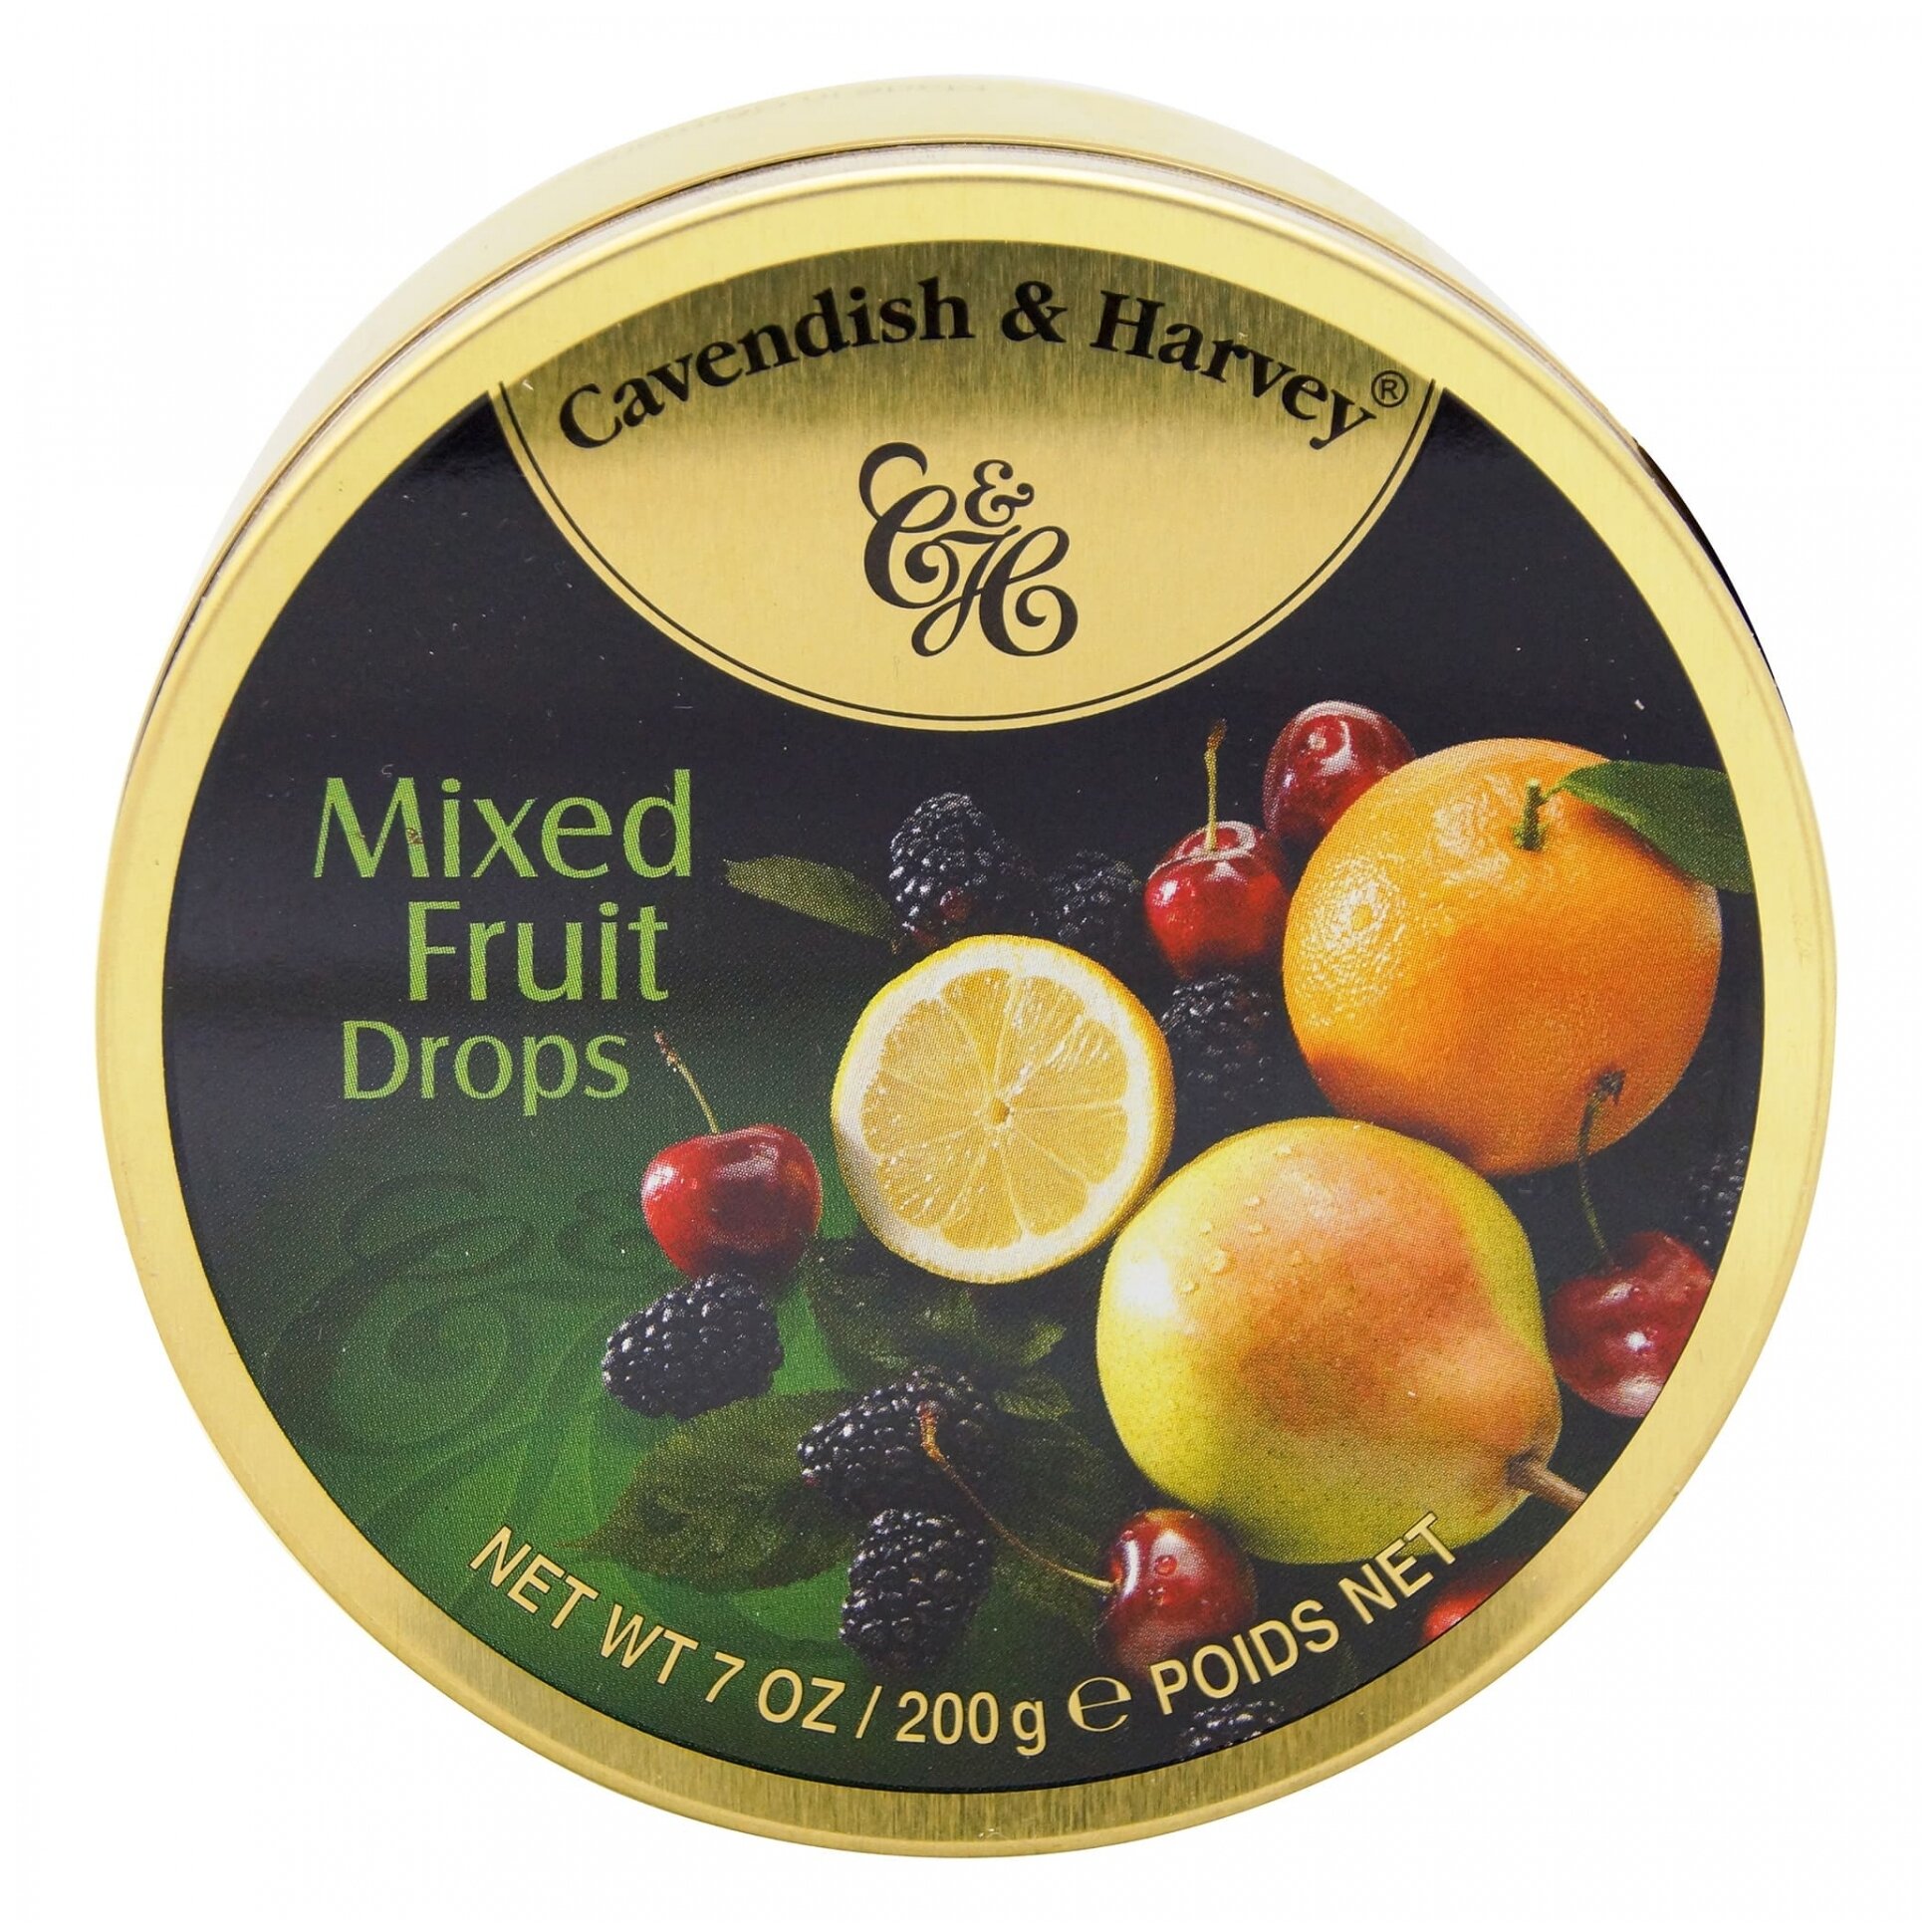 Cavendish & Harvey леденцы Mixed Fruit Drops 200г - фотография № 3